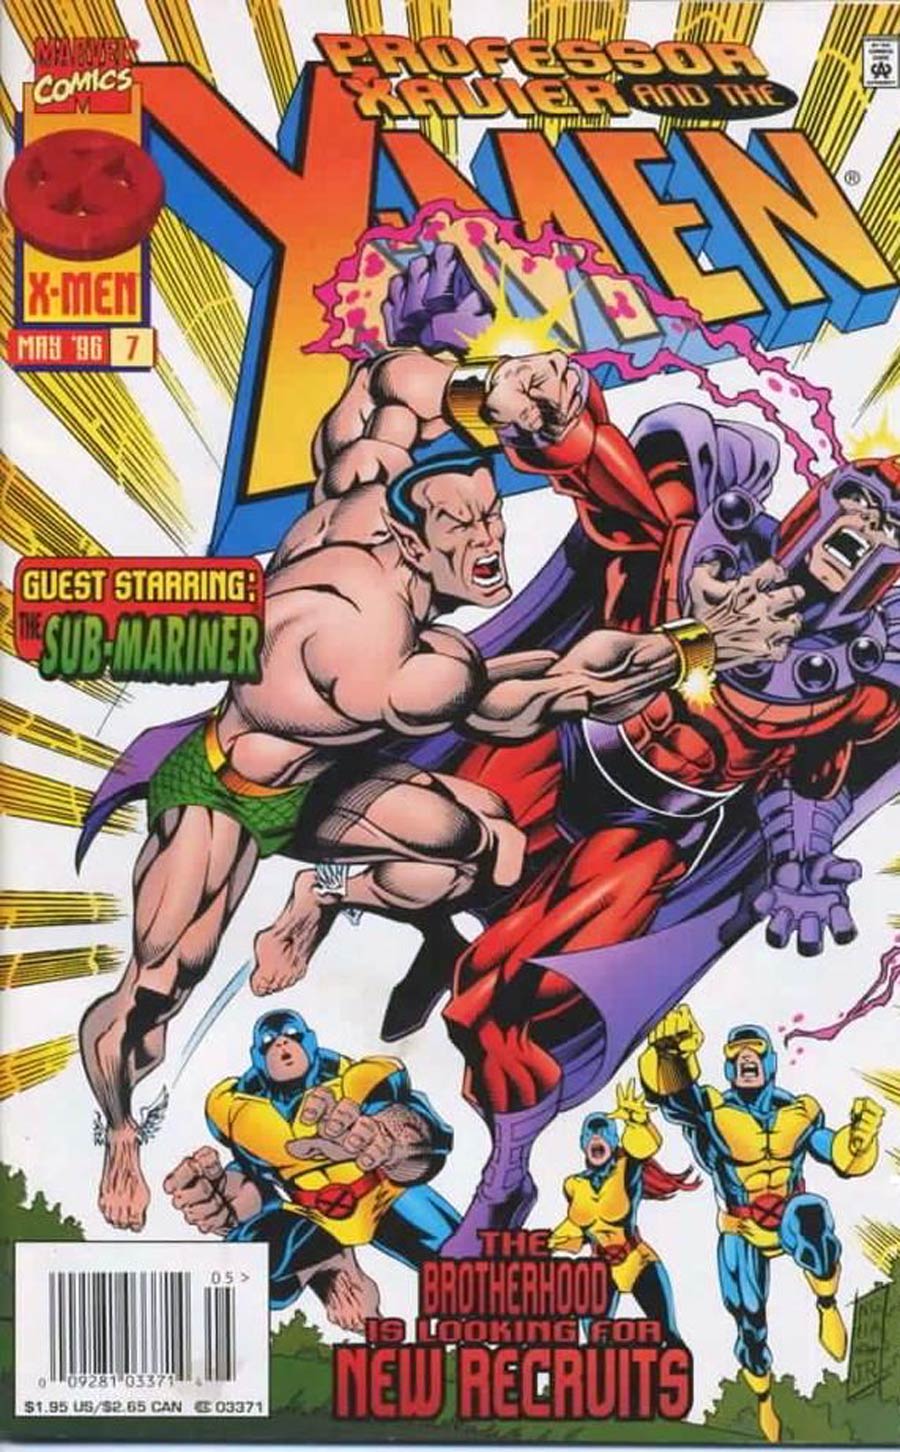 Professor Xavier And The X-Men #7 Cover B Flipbook